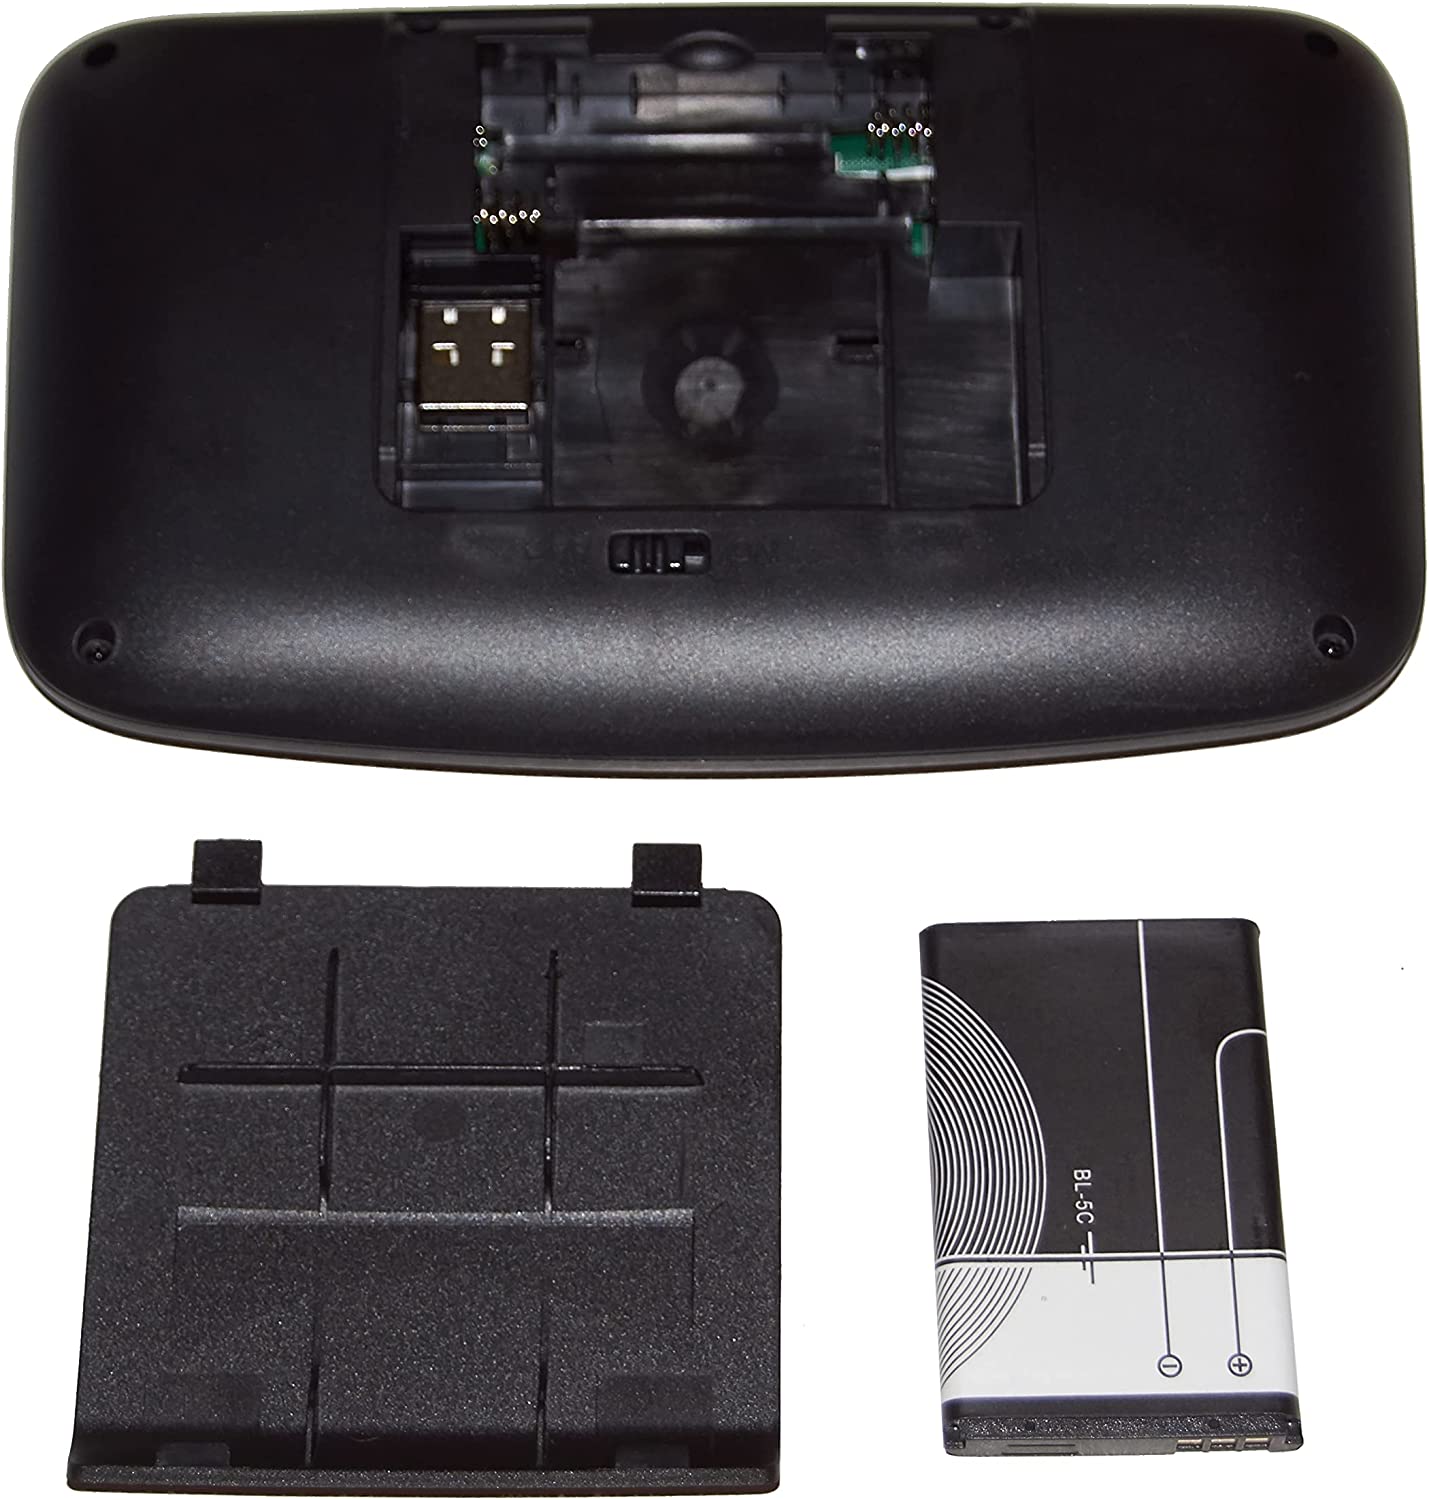 Mini teclado sem fio com touchpad - Pacote de 10 unidades